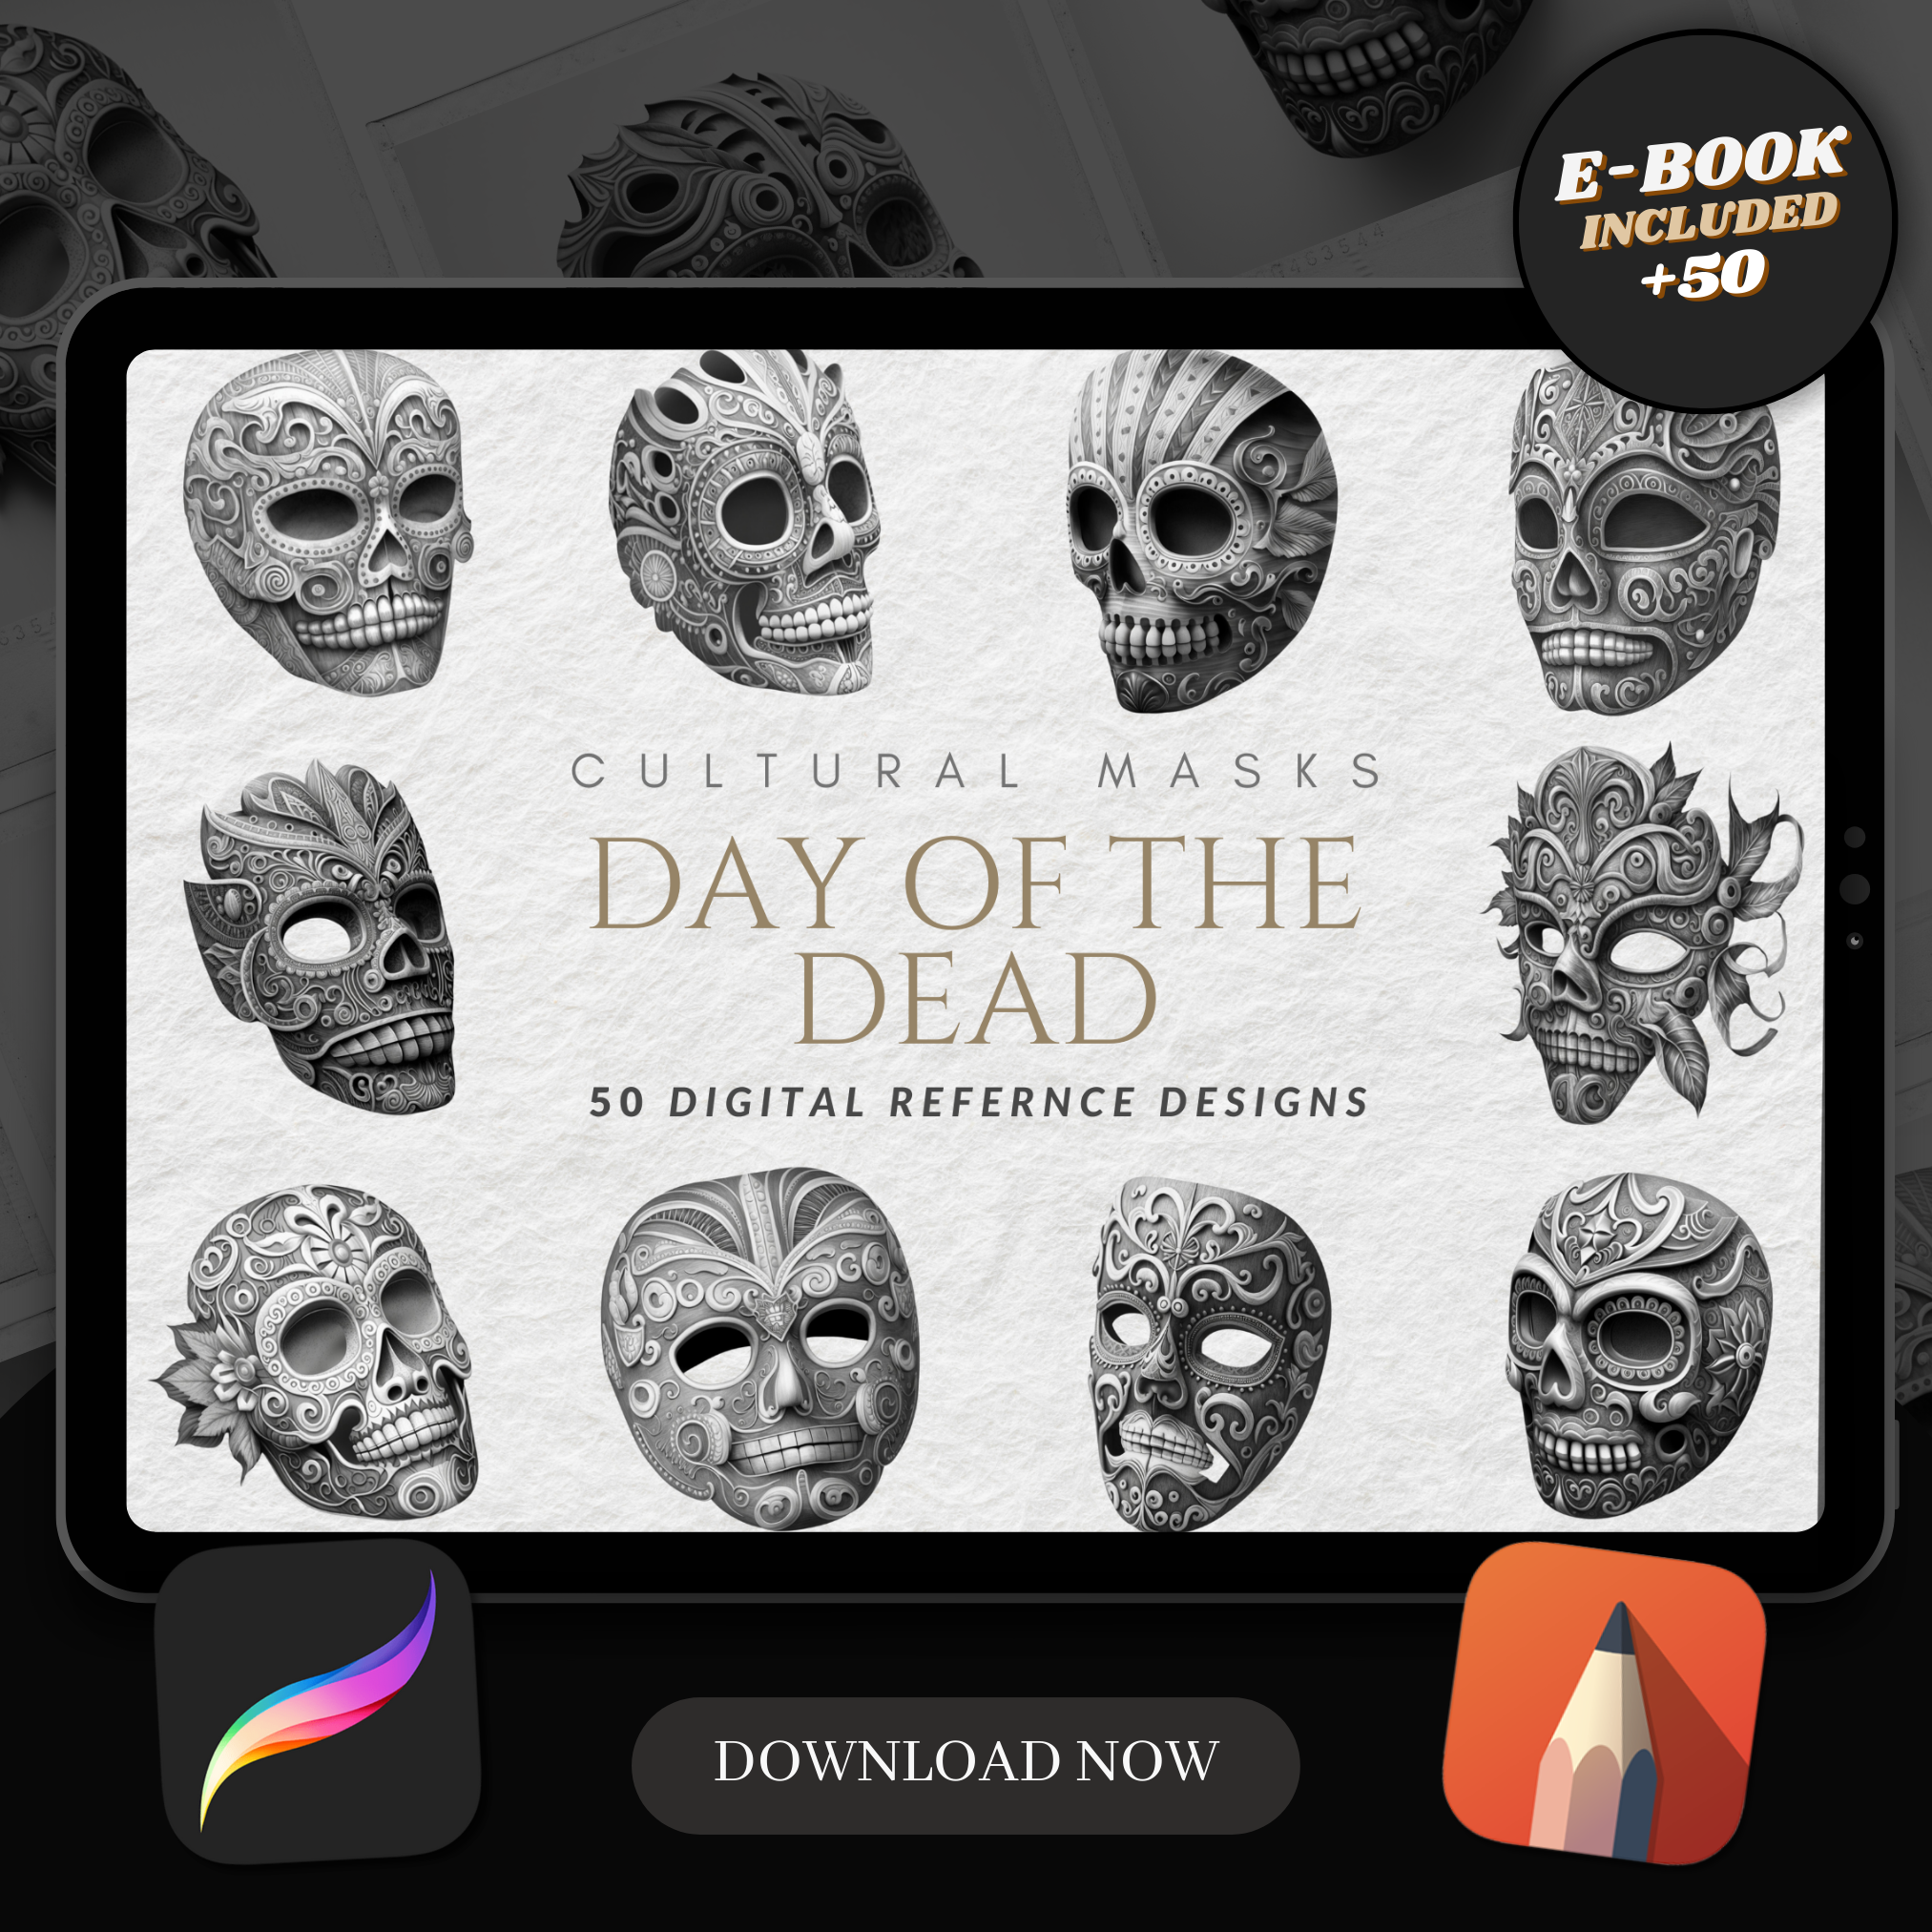 Day of the Dead Masks Digital Reference Design Collection: 50 Procreate & Sketchbook Images